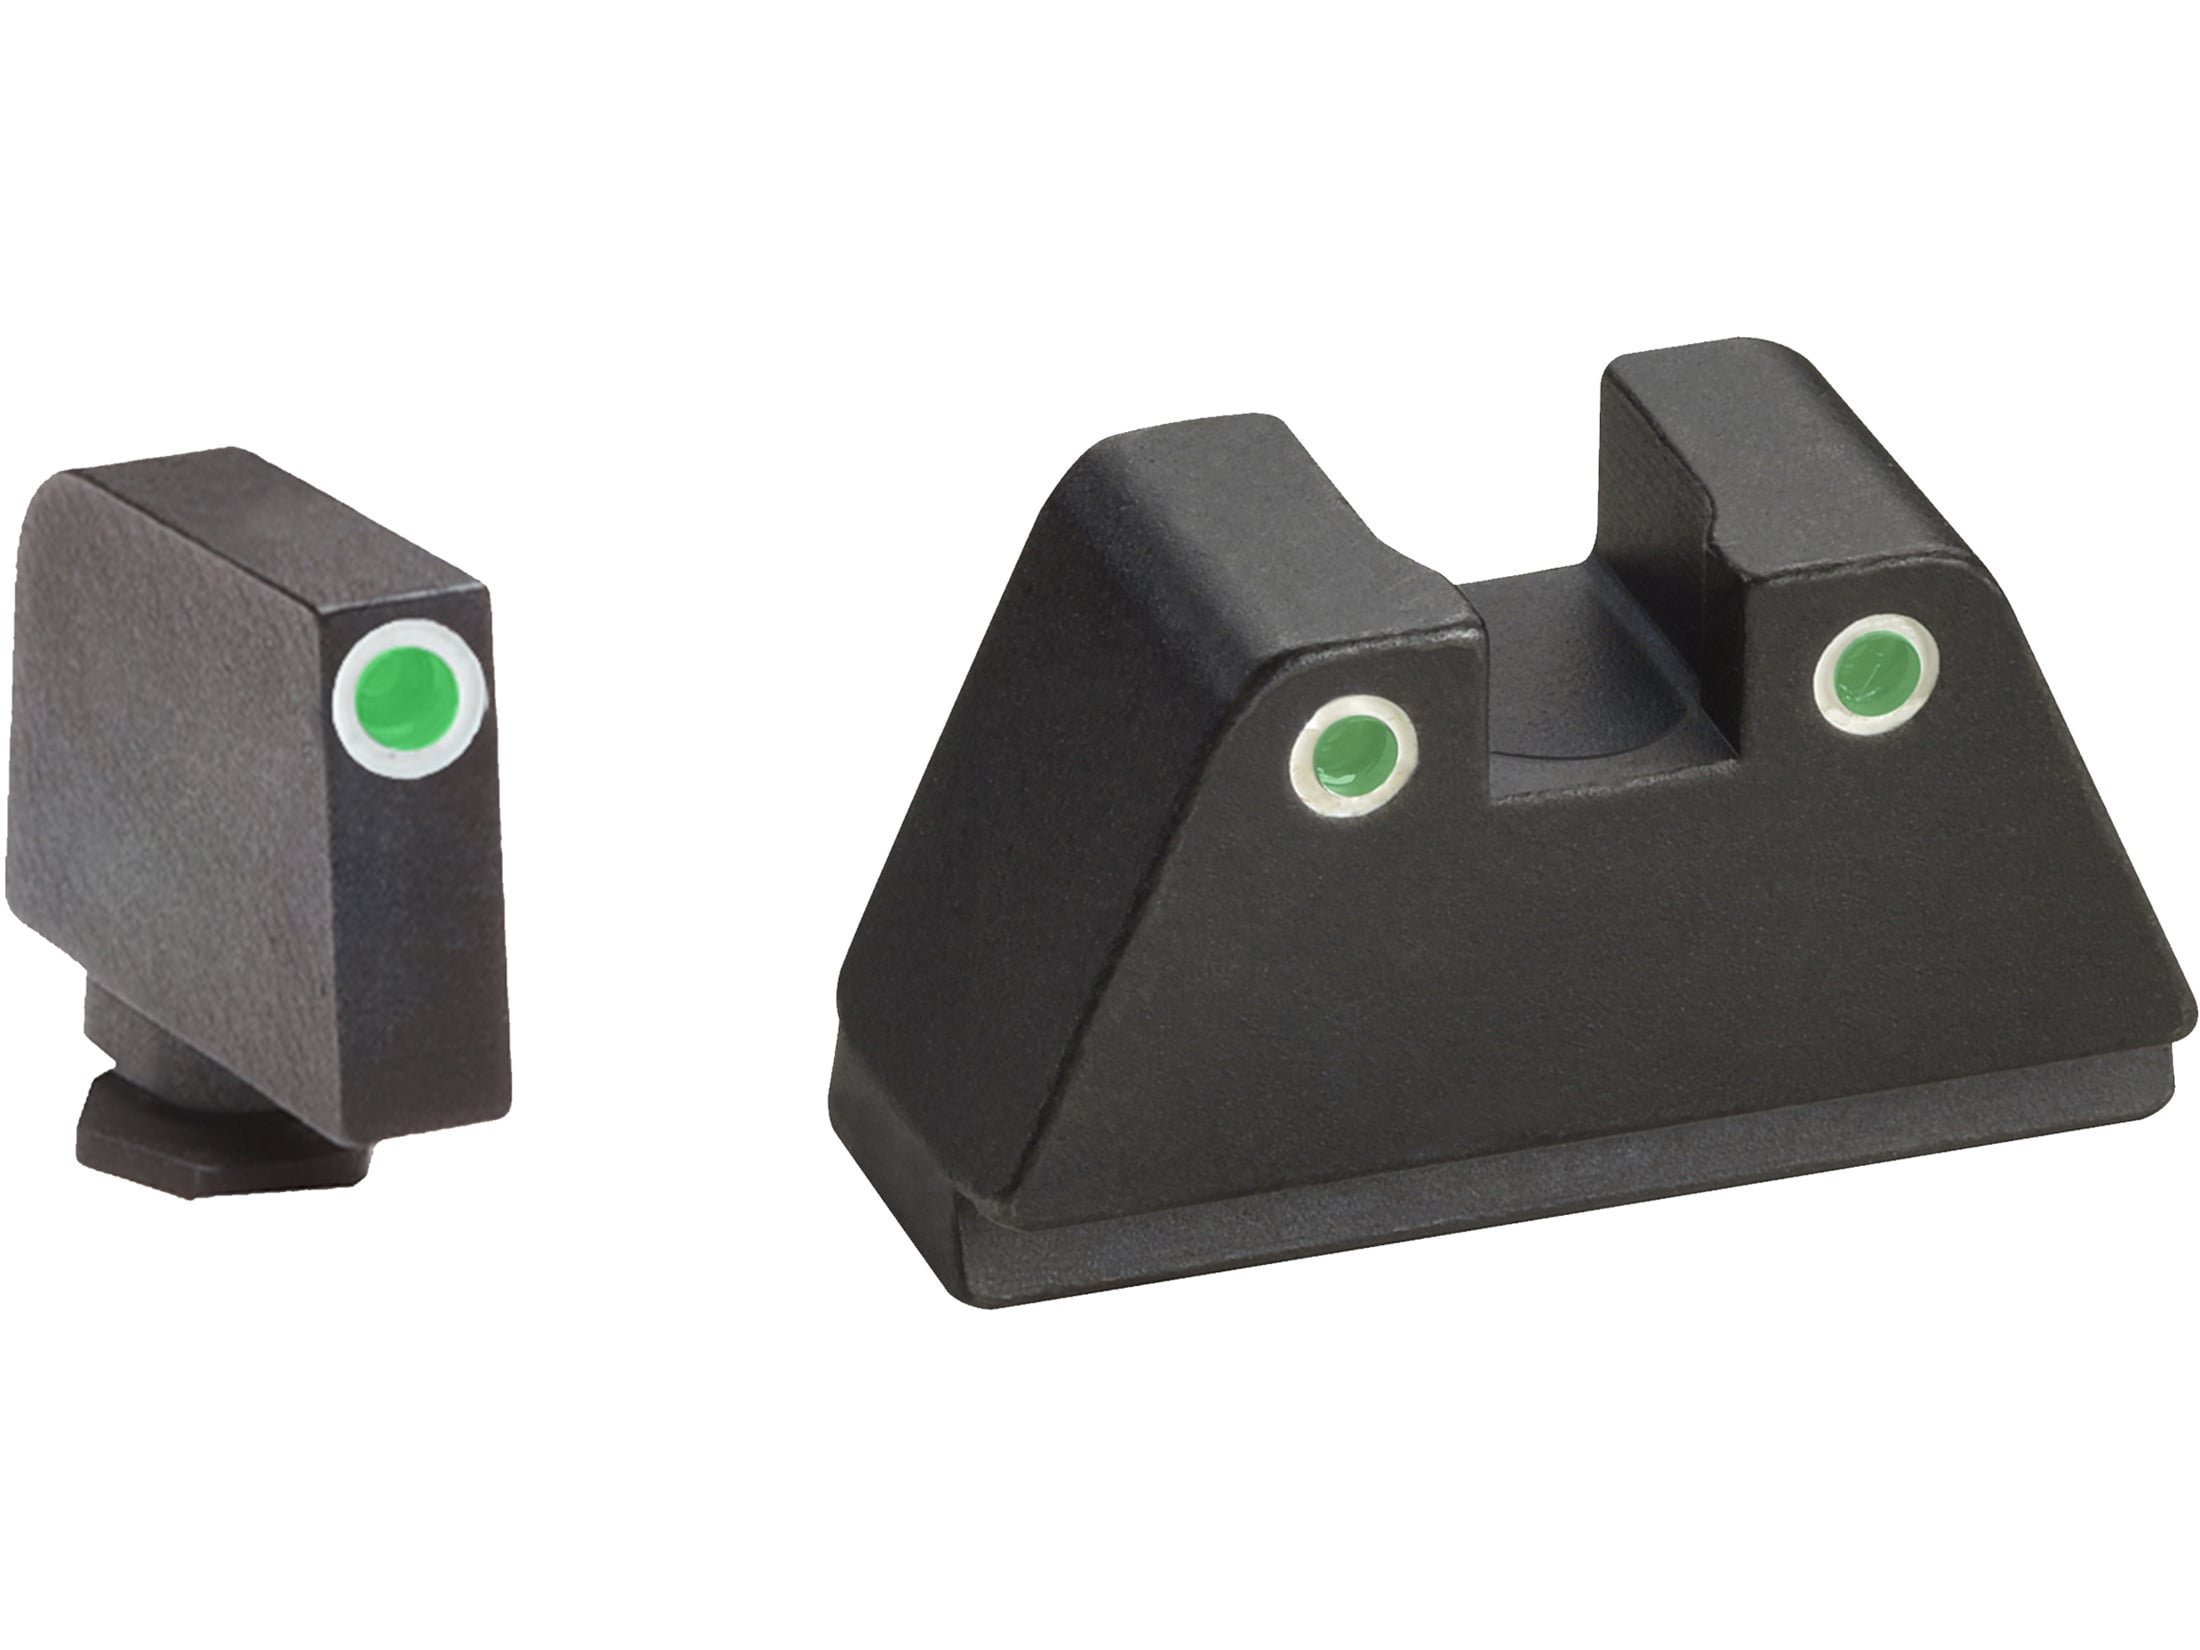 The Ameriglo XL Classic Suppressor Sight Set for Glock Pistols features tal...